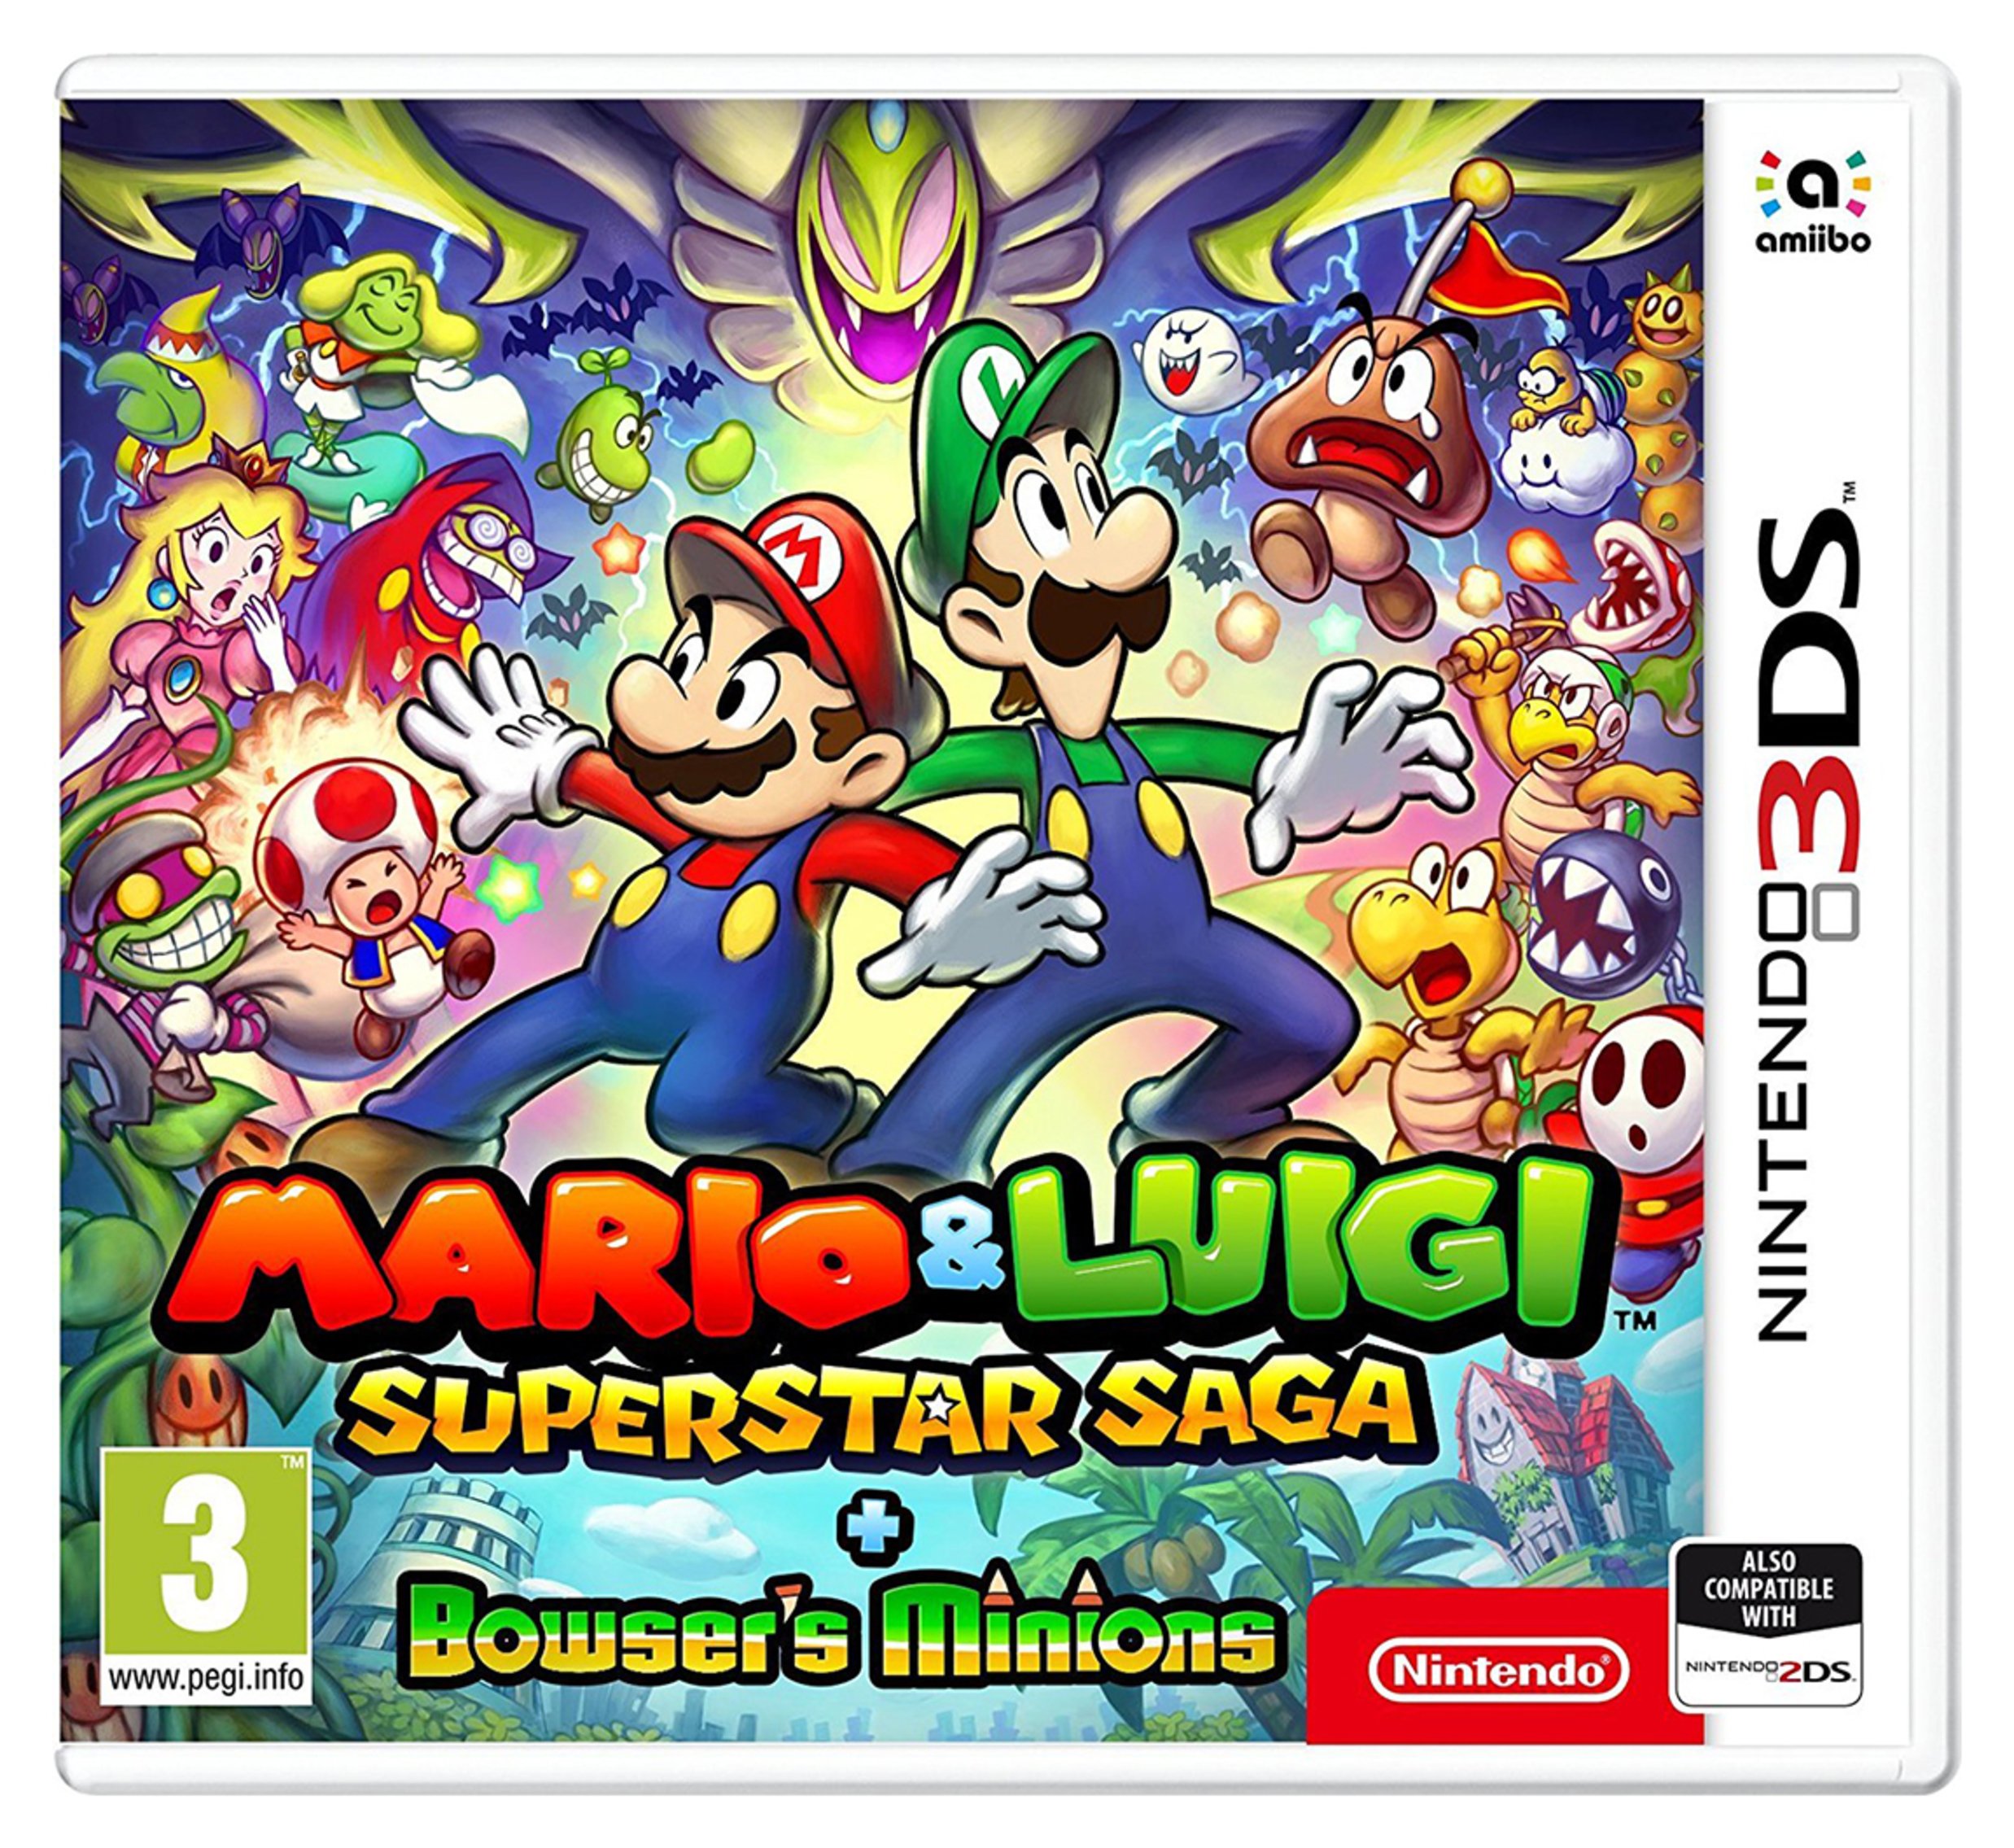 Mario and Luigi: Superstars Nintendo 3DS Game Review